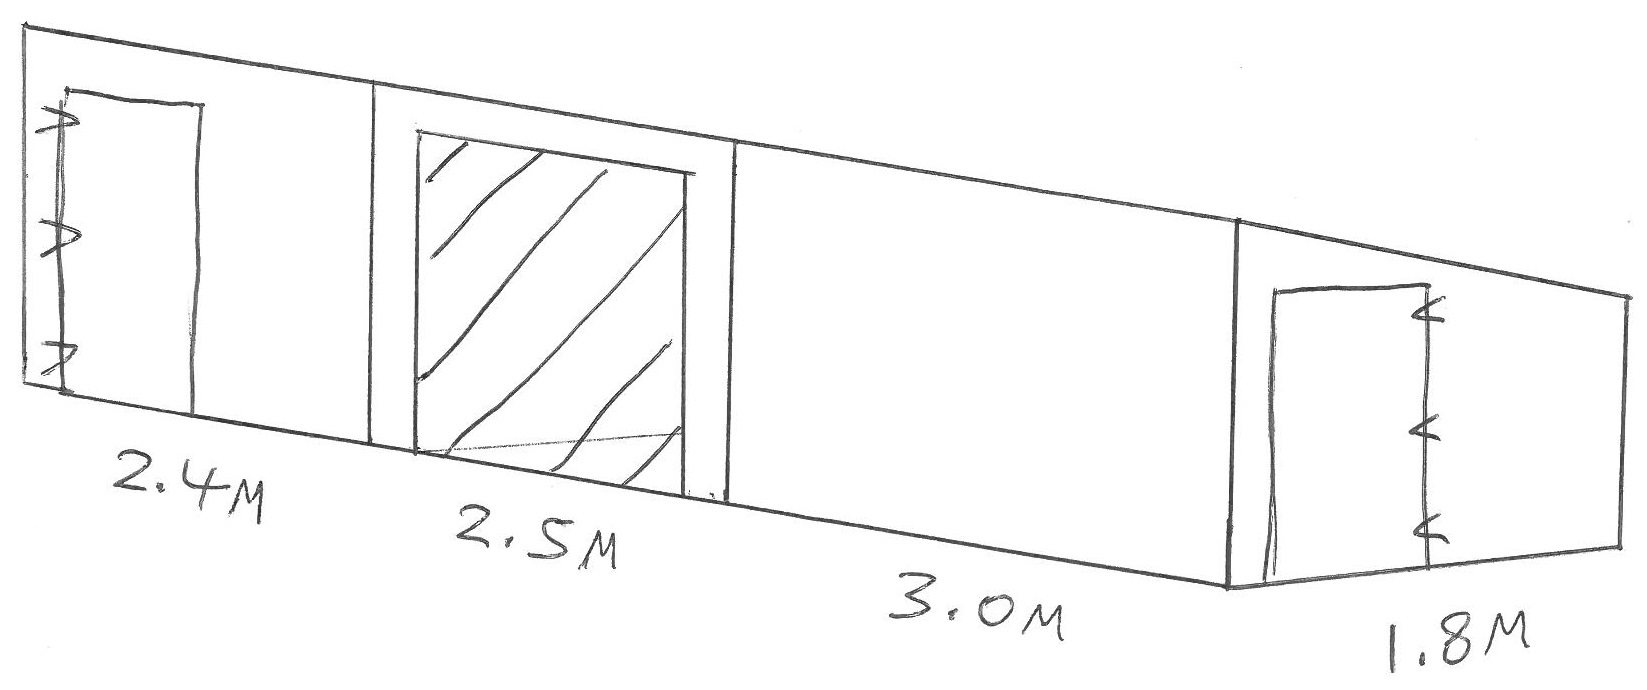 Specials diagram example